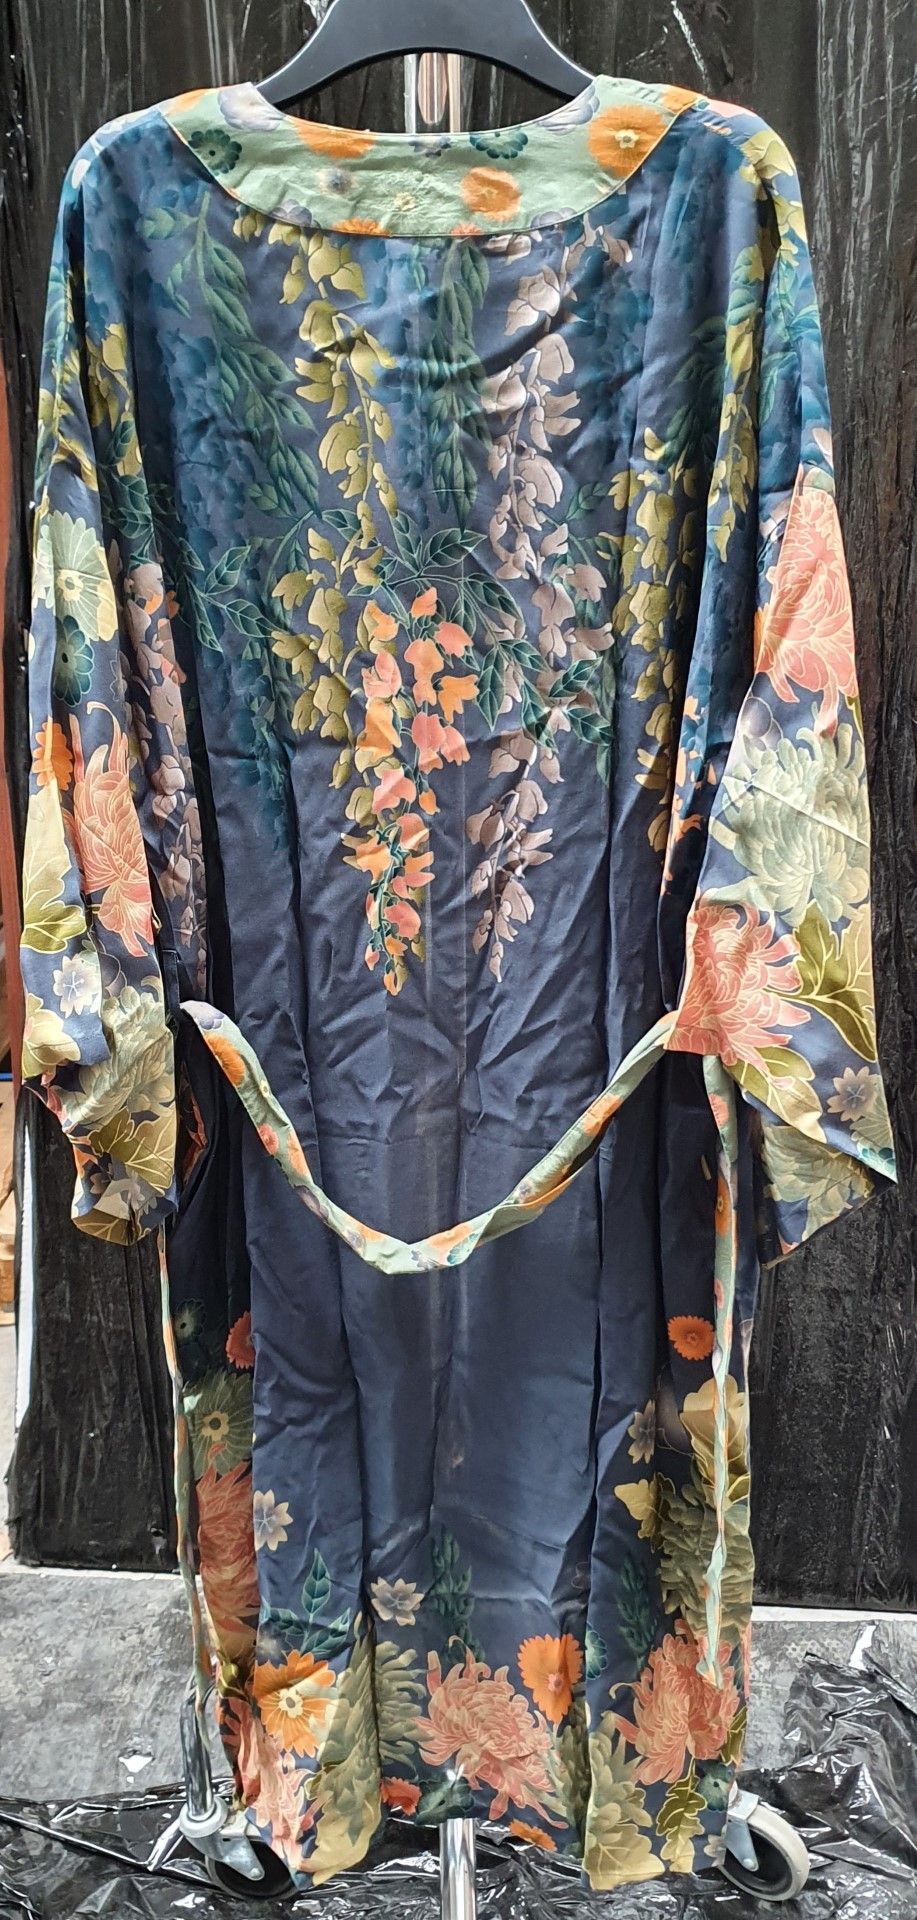 6 x Powder Kimono Style Gowns and 1 x Scarf - Folk Art Petal Finish 100% Viscose Fabric - Adult - Image 12 of 22